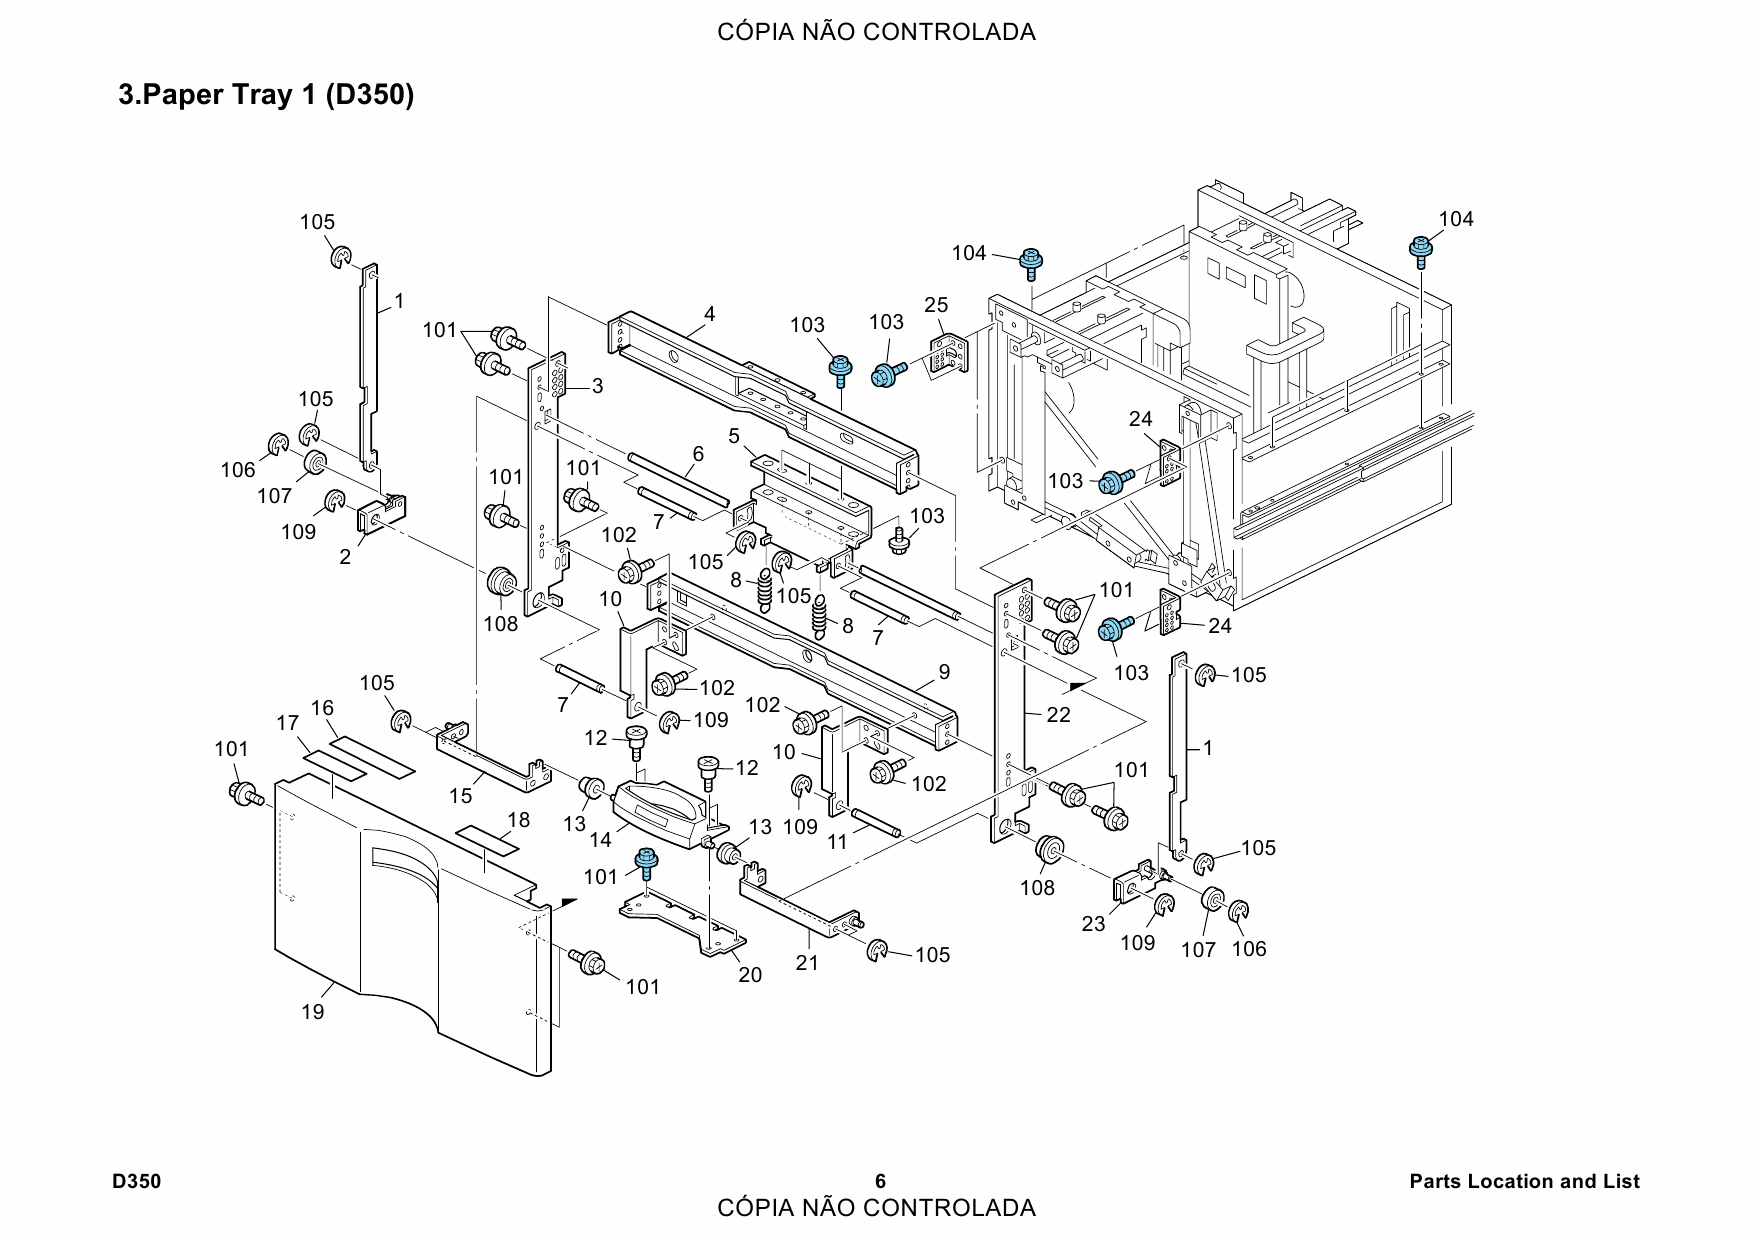 RICOH Options D350 RT4000-A3 Parts Catalog PDF download-3